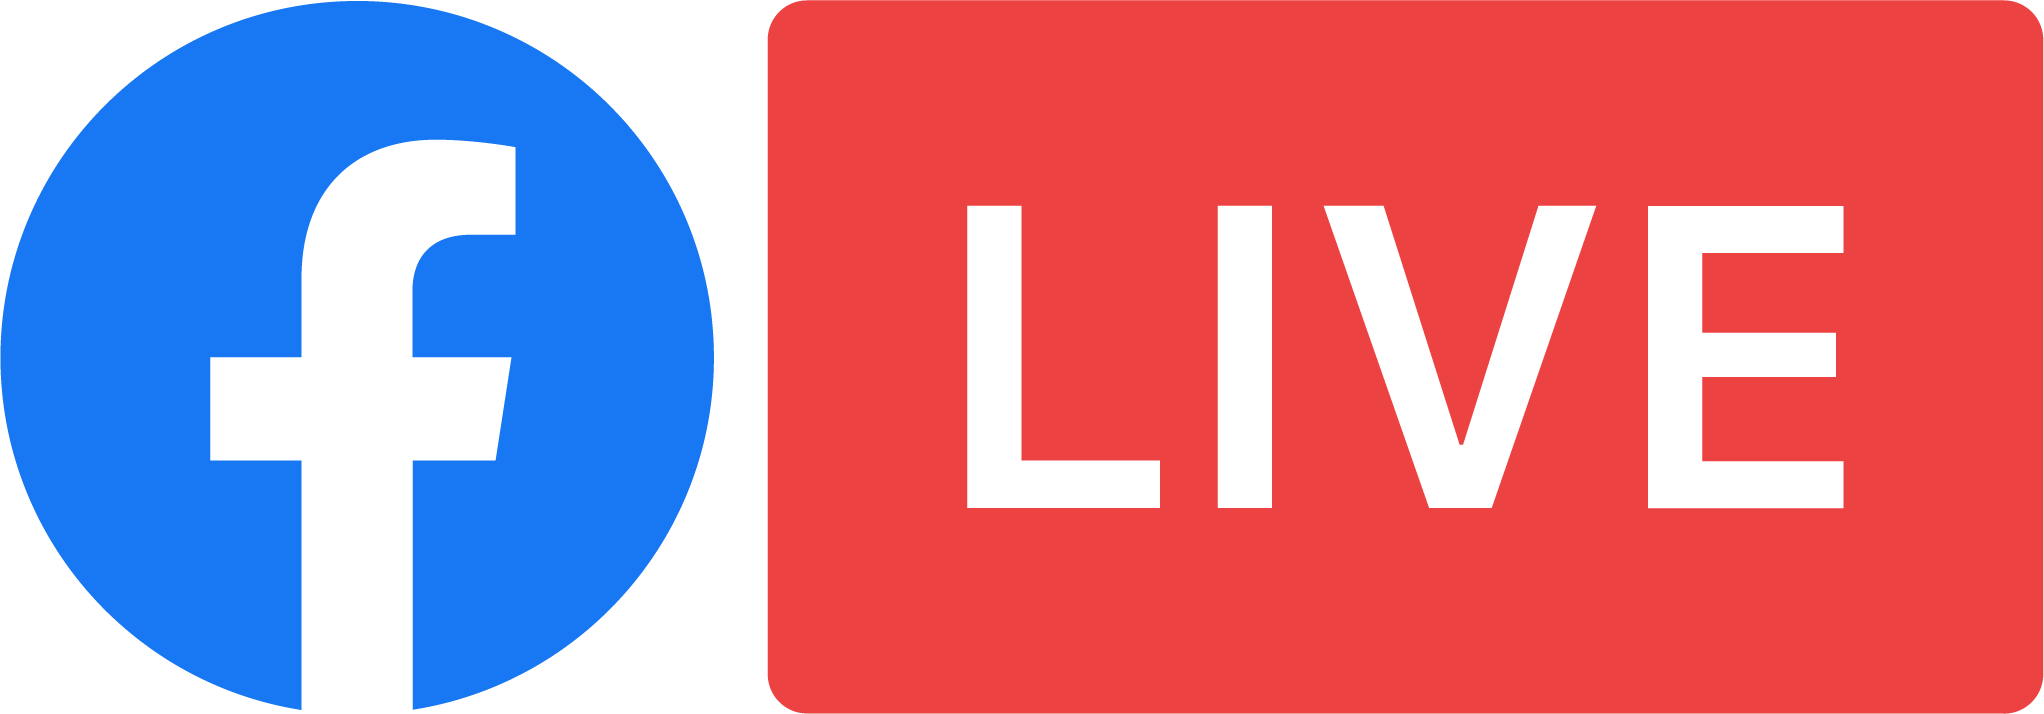 Facebook Live Logo Png E Svg Download Vetorial Transparente